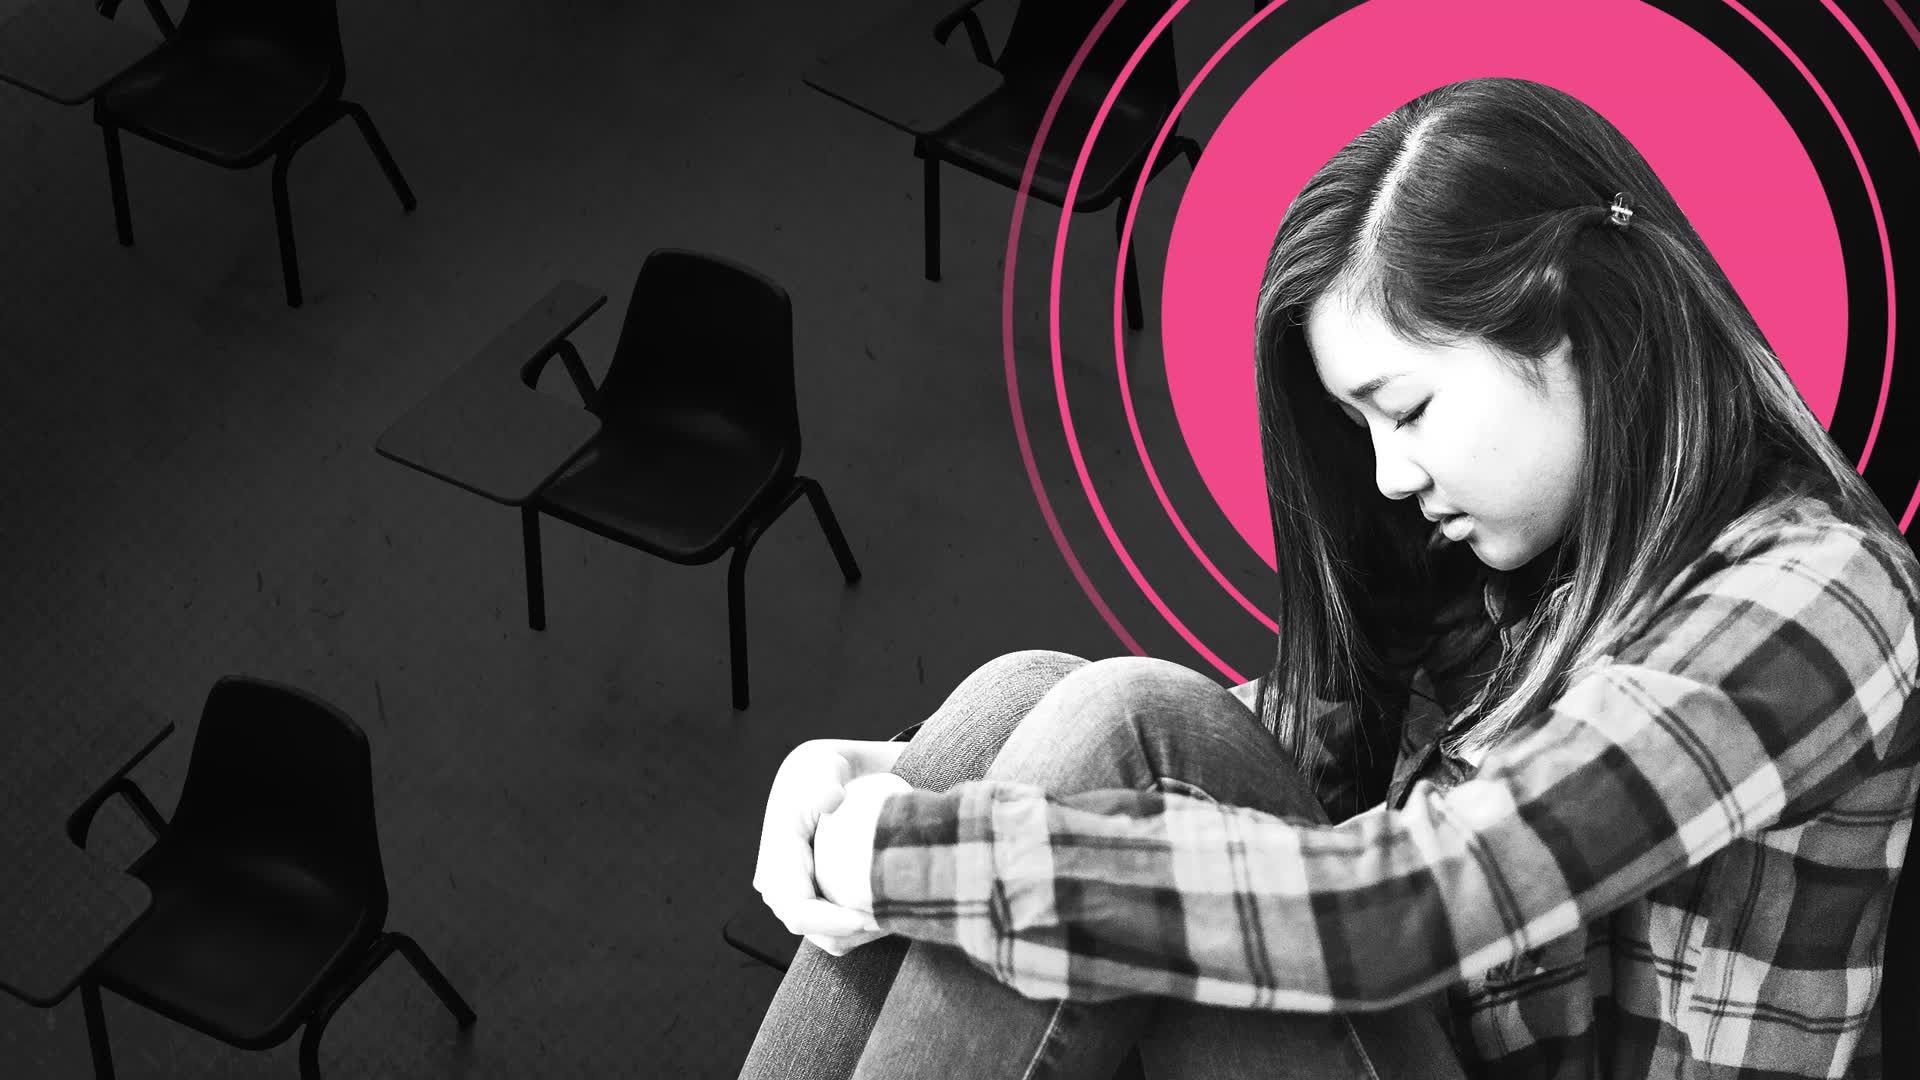 Xxxe Vido School Hot - Sexual Harassment in School - Real Girls Share Experiences Of Sexual  Assault in School